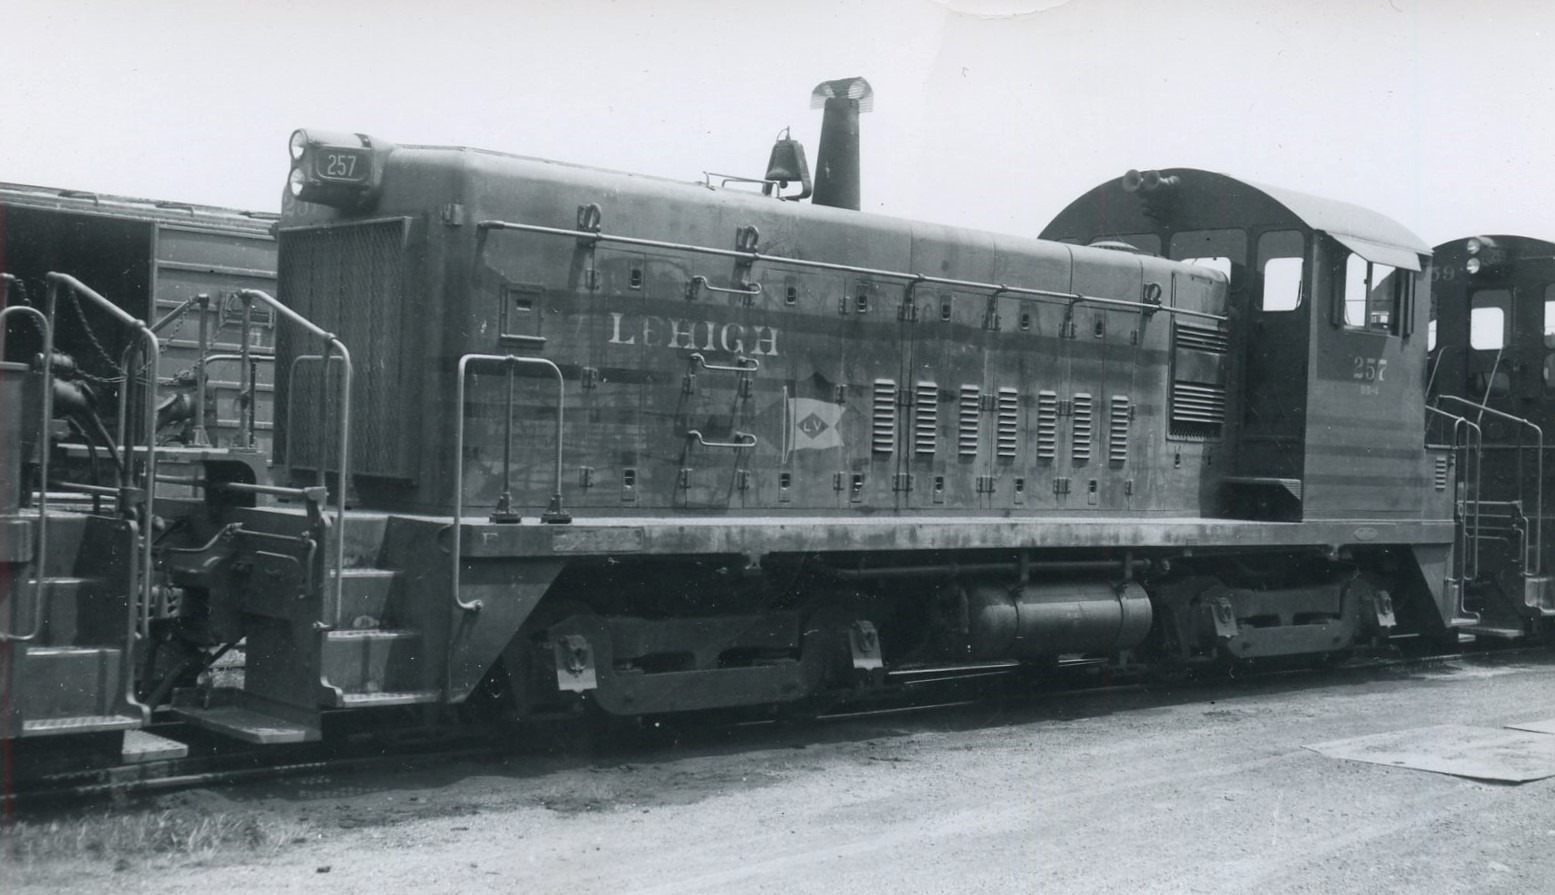 Lehigh Valley | Hazleton, Pennsylvania | EMD SW8 #257 diesel-electric locomotive | July 18, 1964 | Arthur. B. Johnson photograph